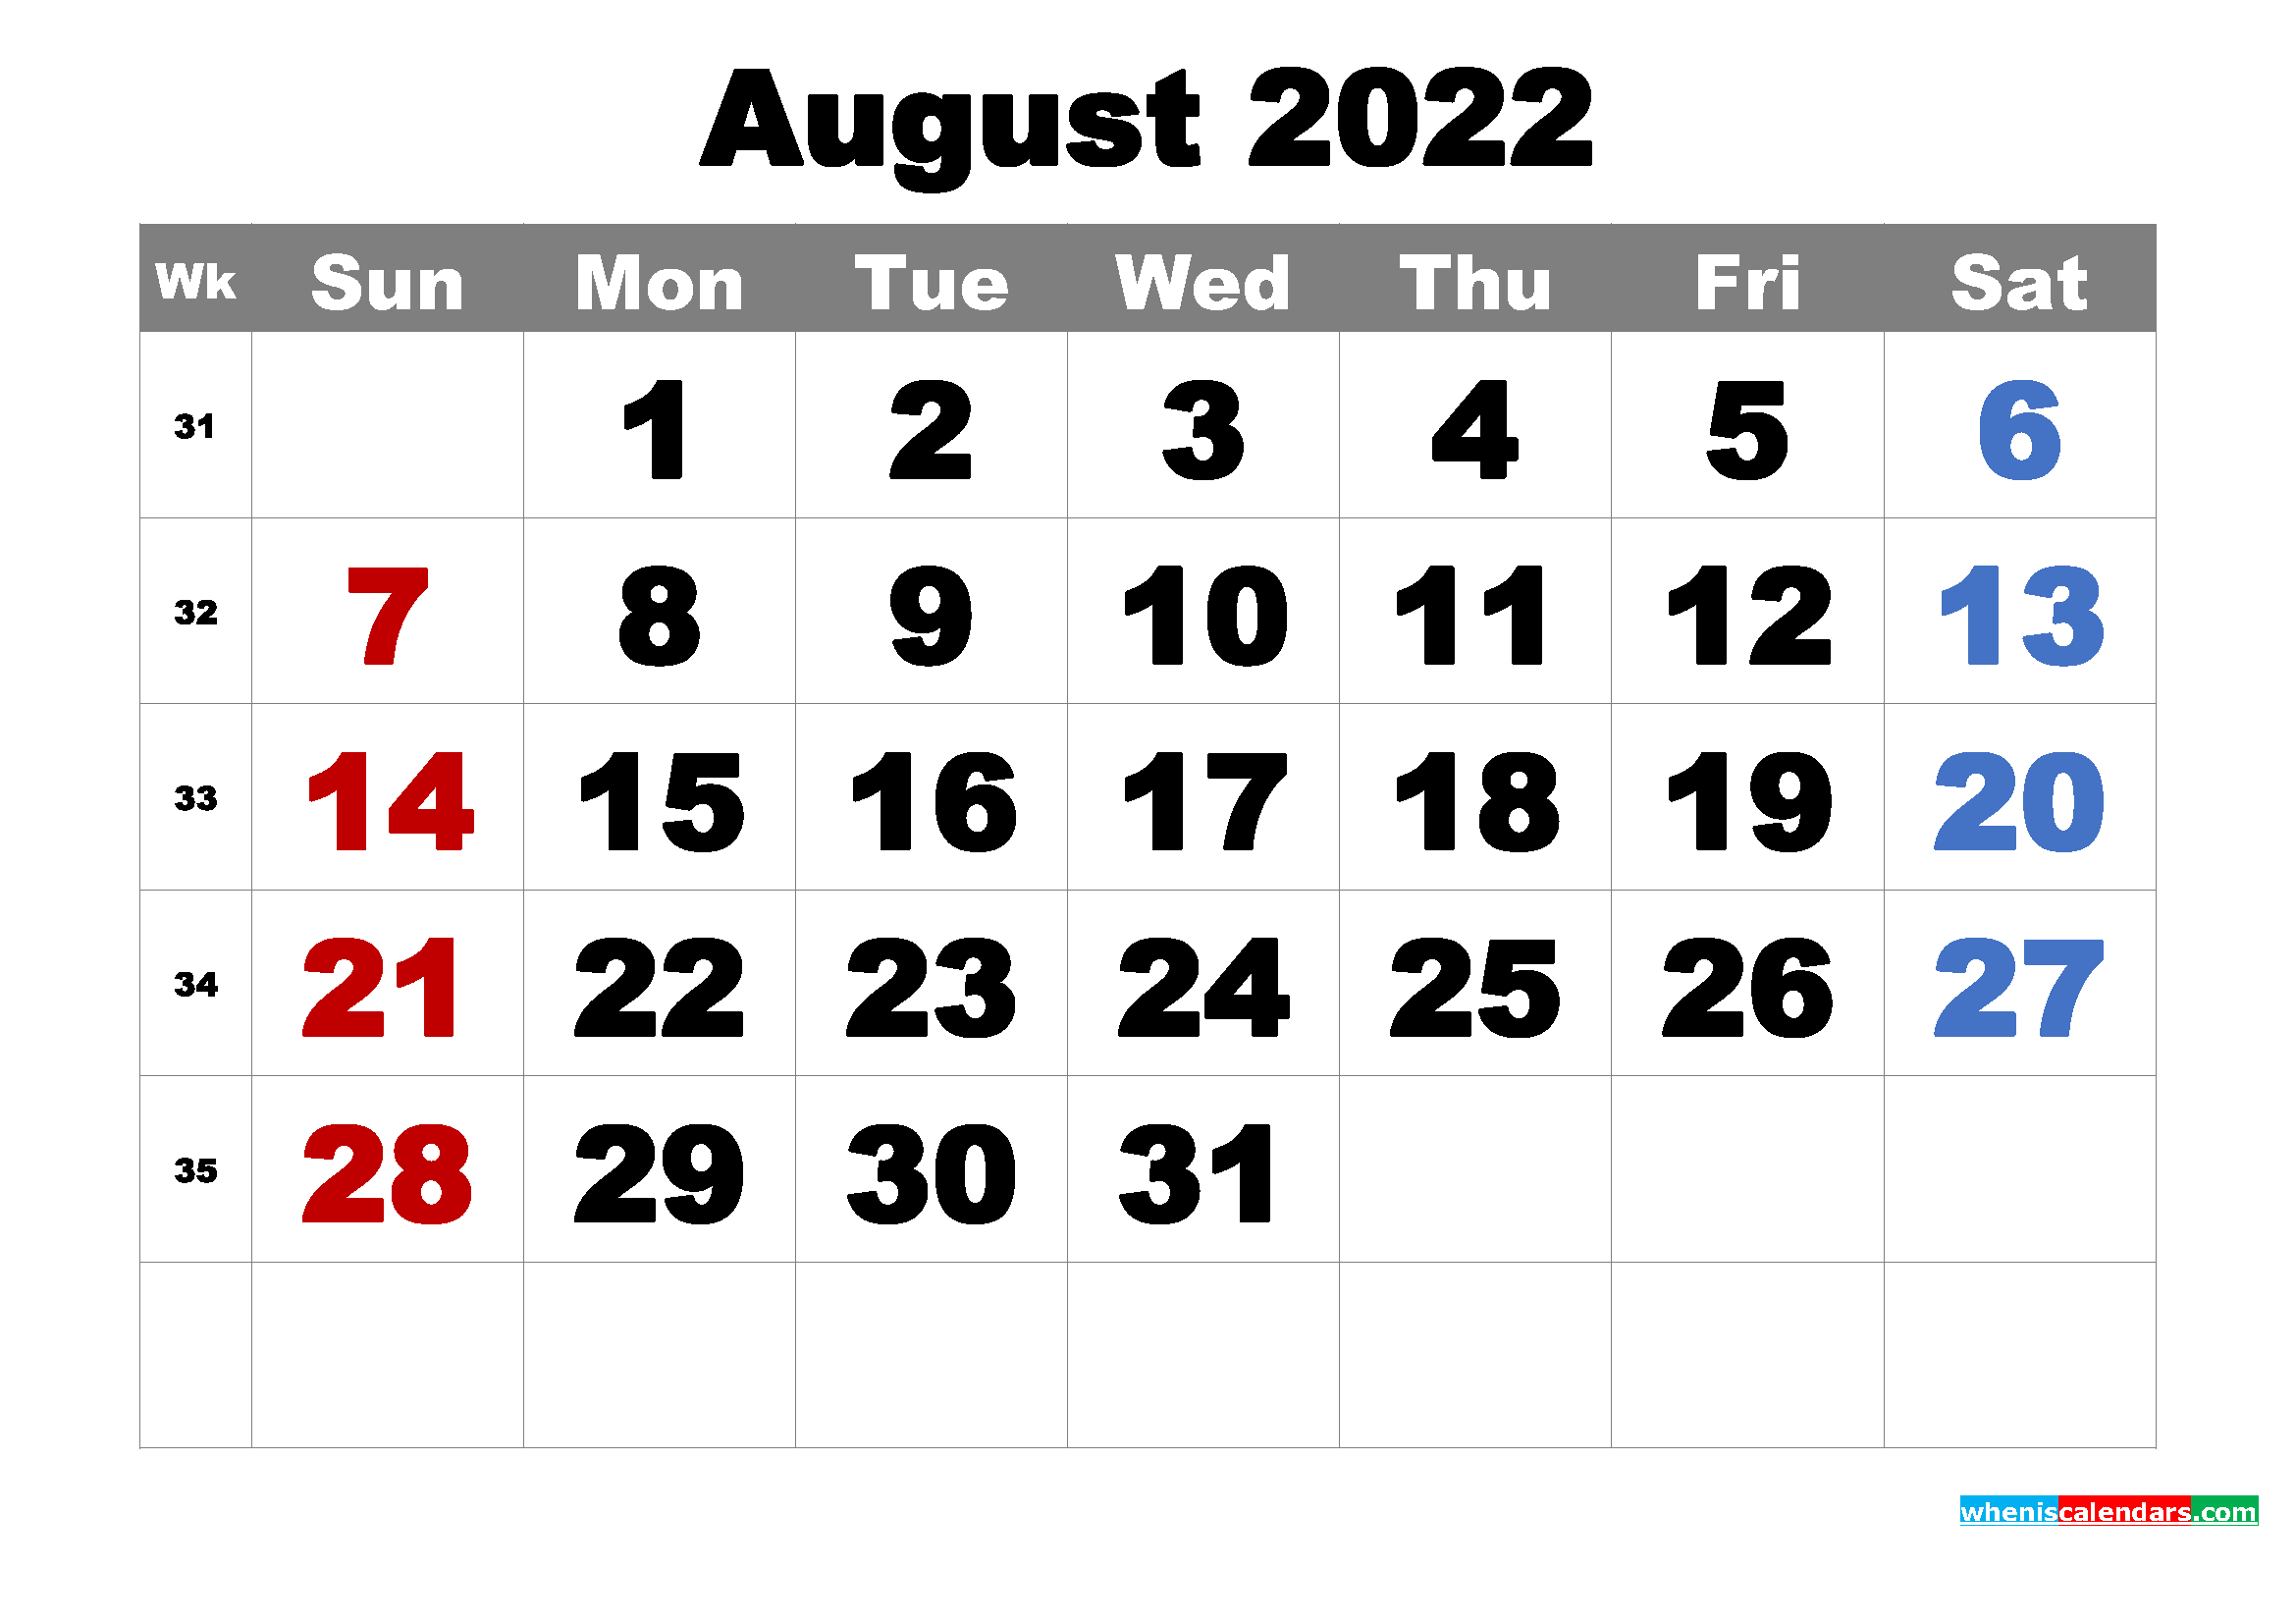 free printable august 2022 calendars wiki calendar august 2022